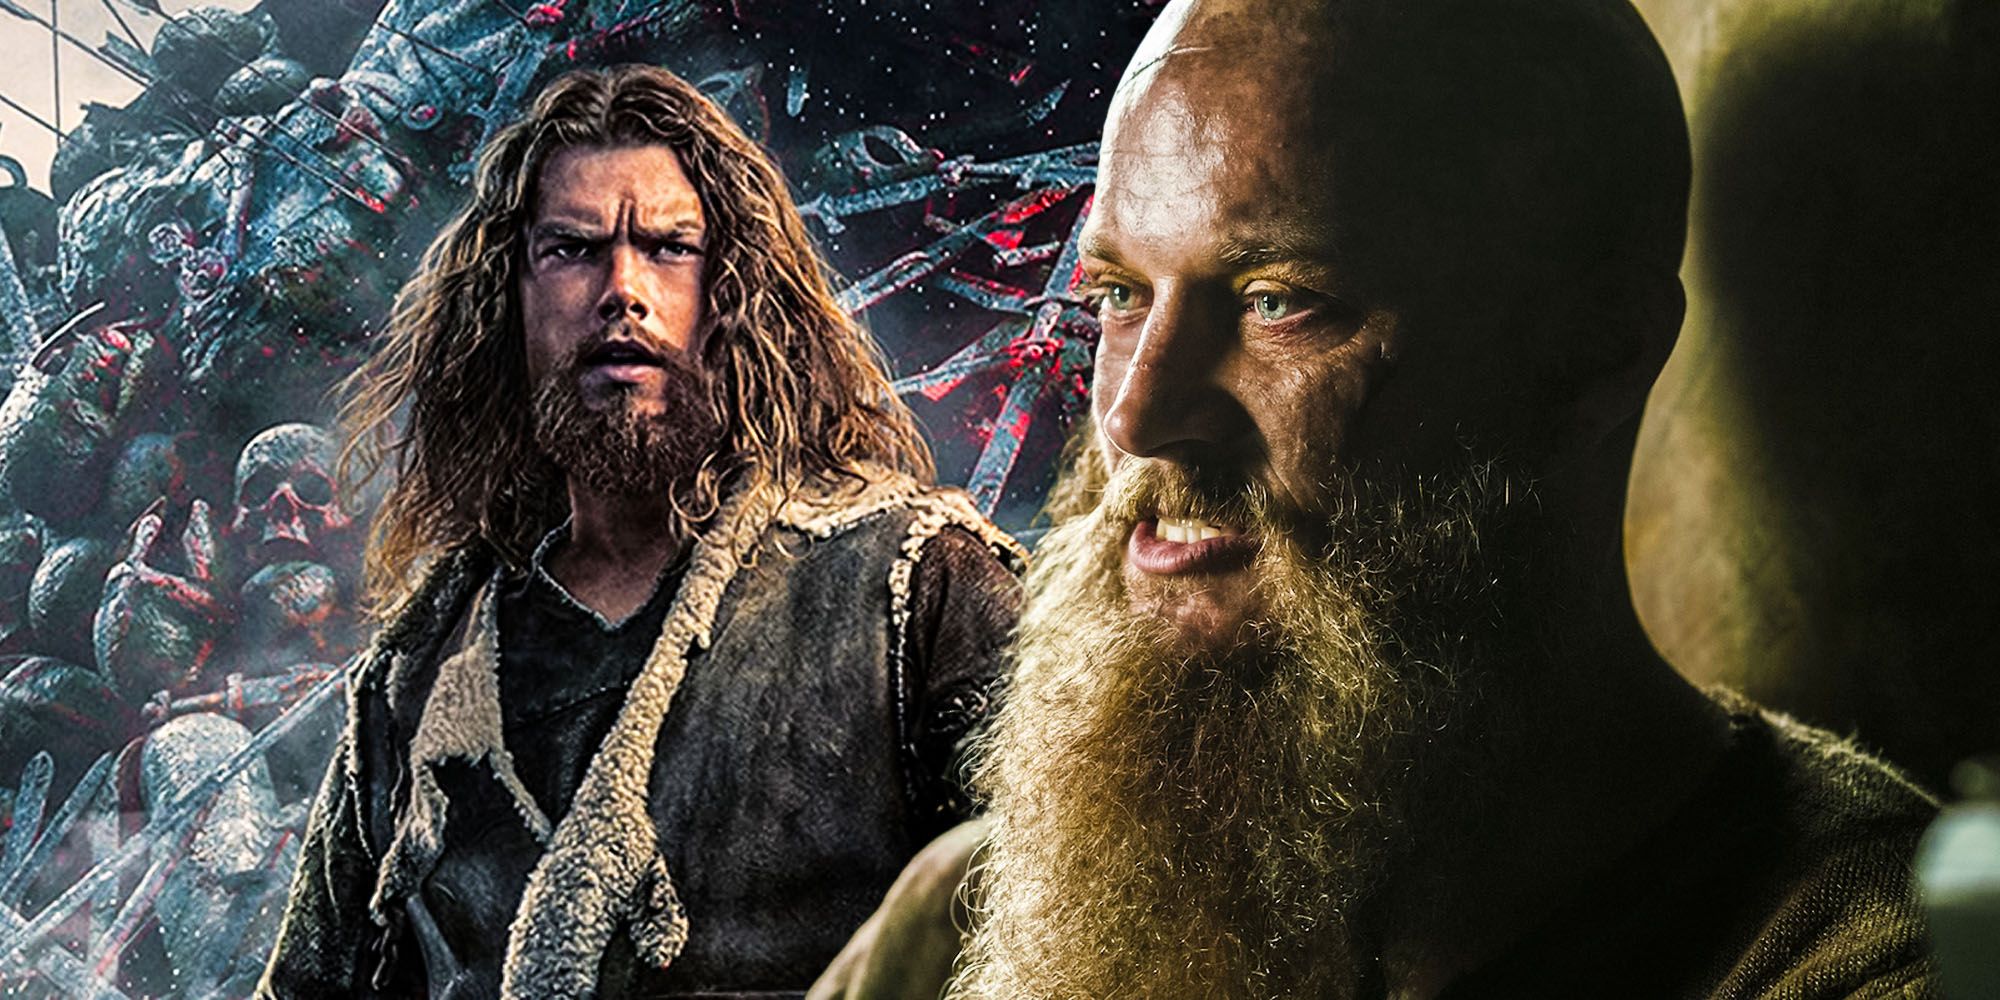 Vikings Valhalla threatens make same mistake as original vikings show